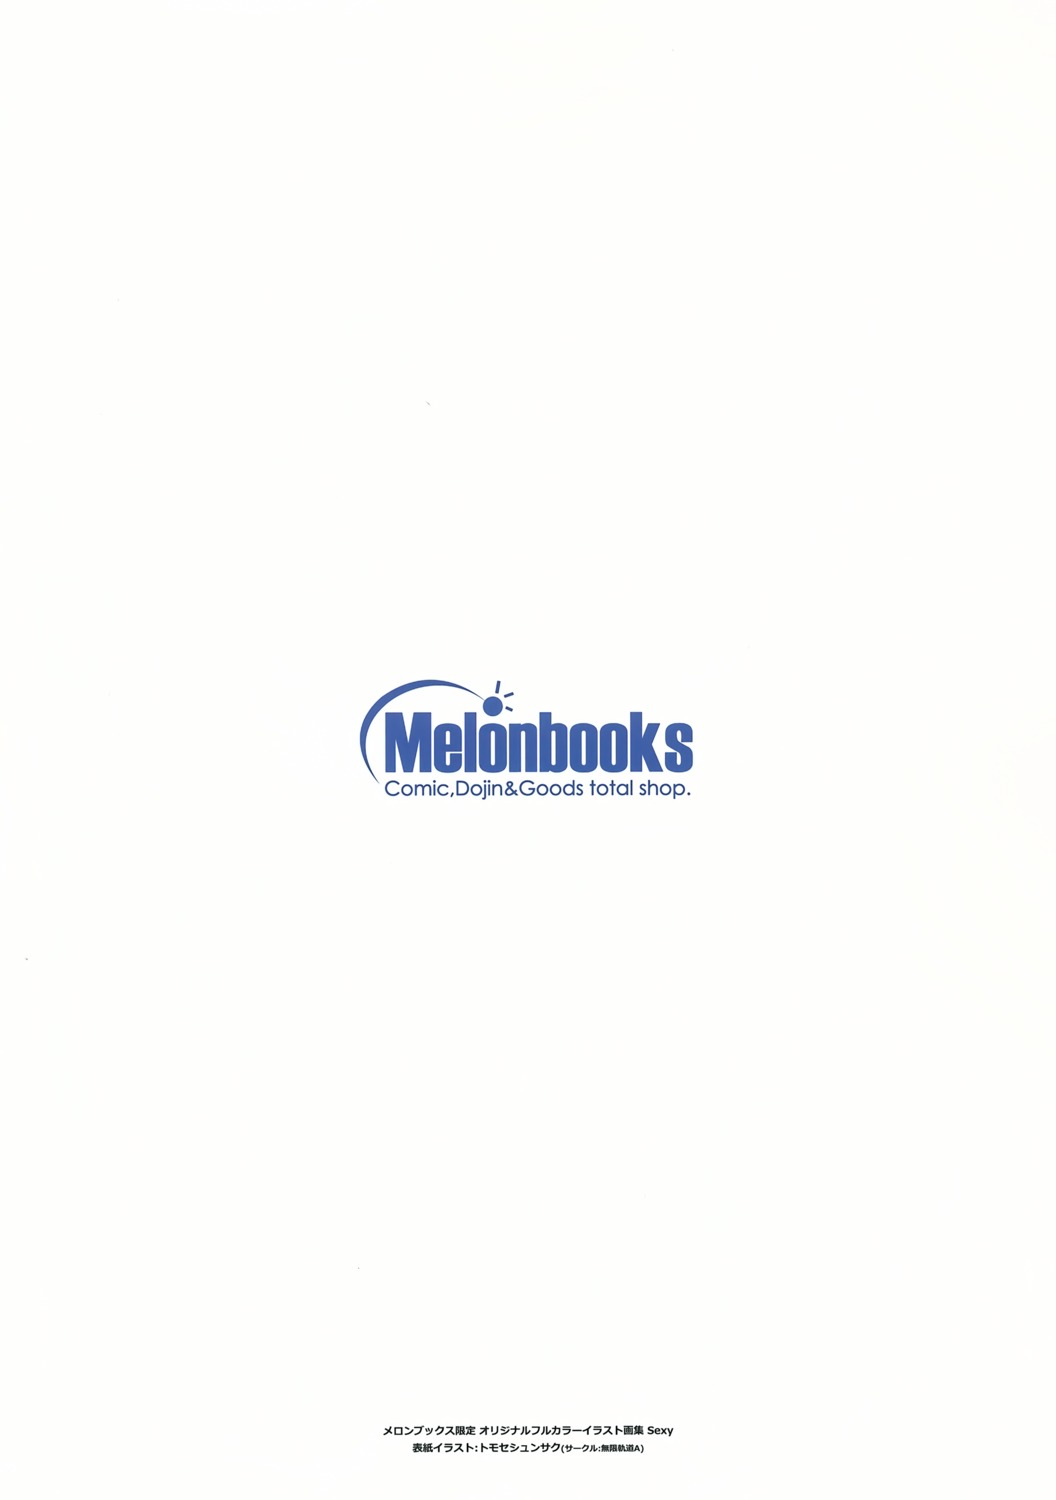 melonbooks text